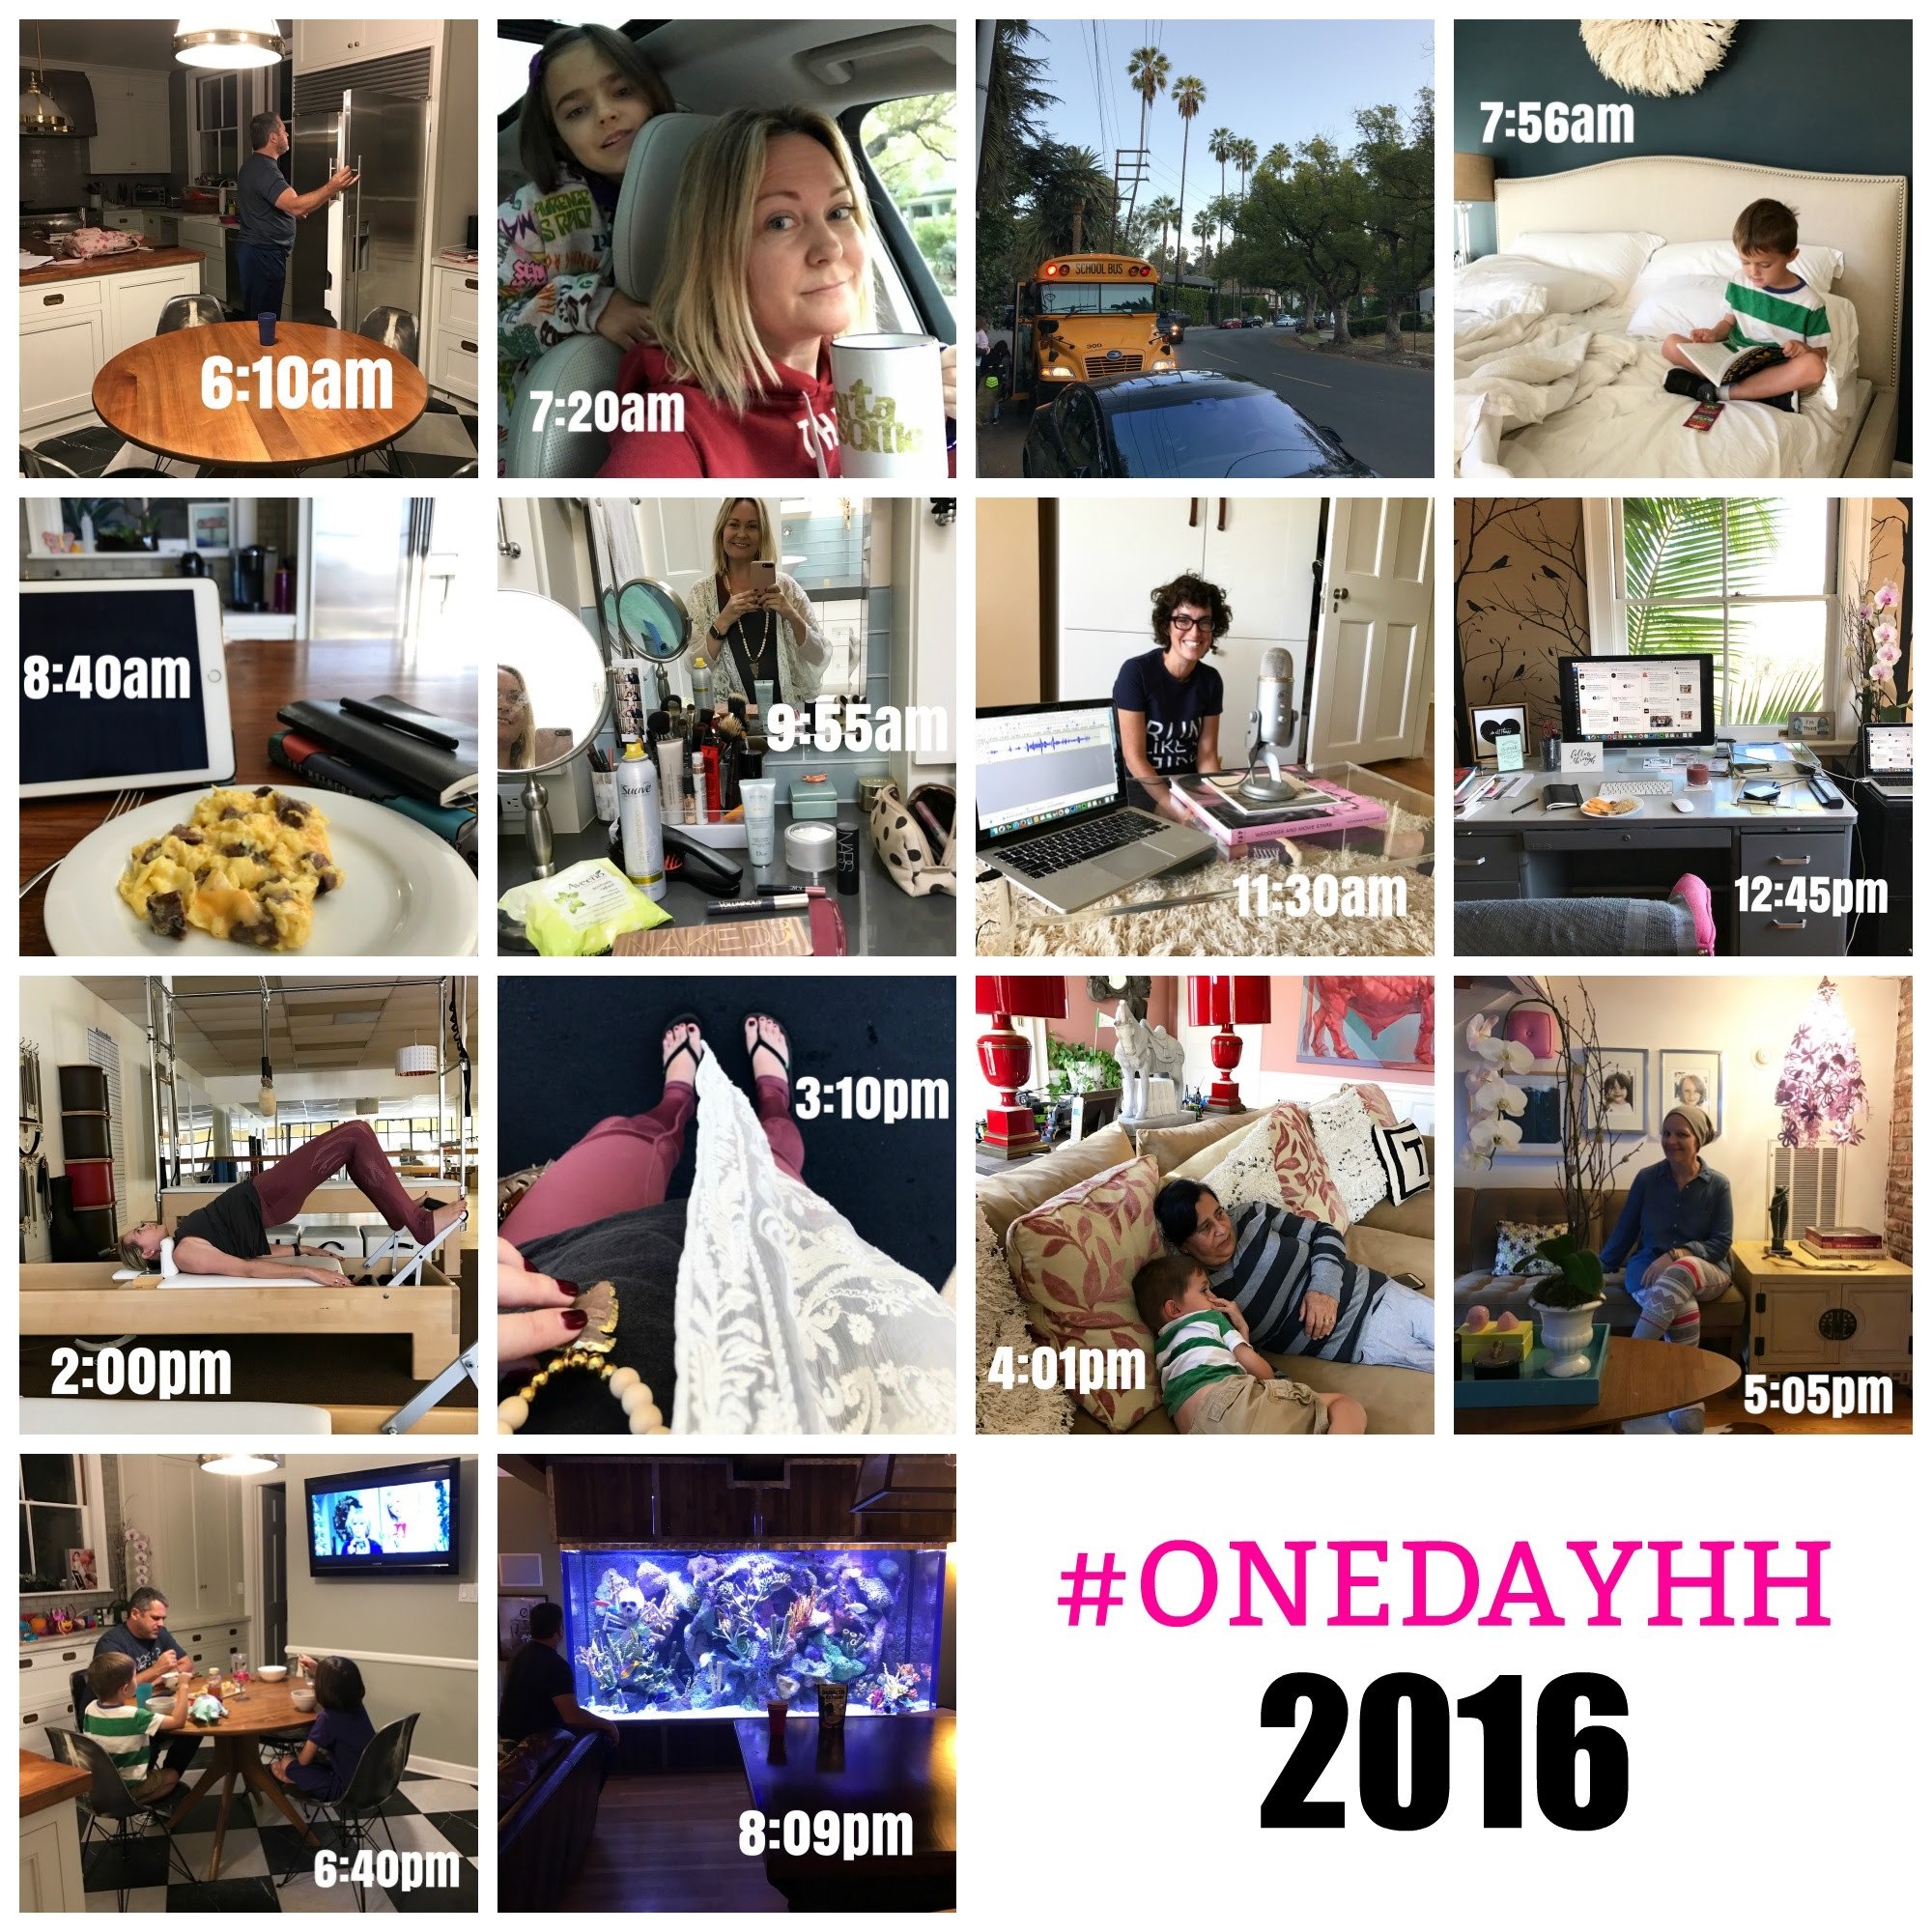 #ONEDAYHH 2016 collage.jpg